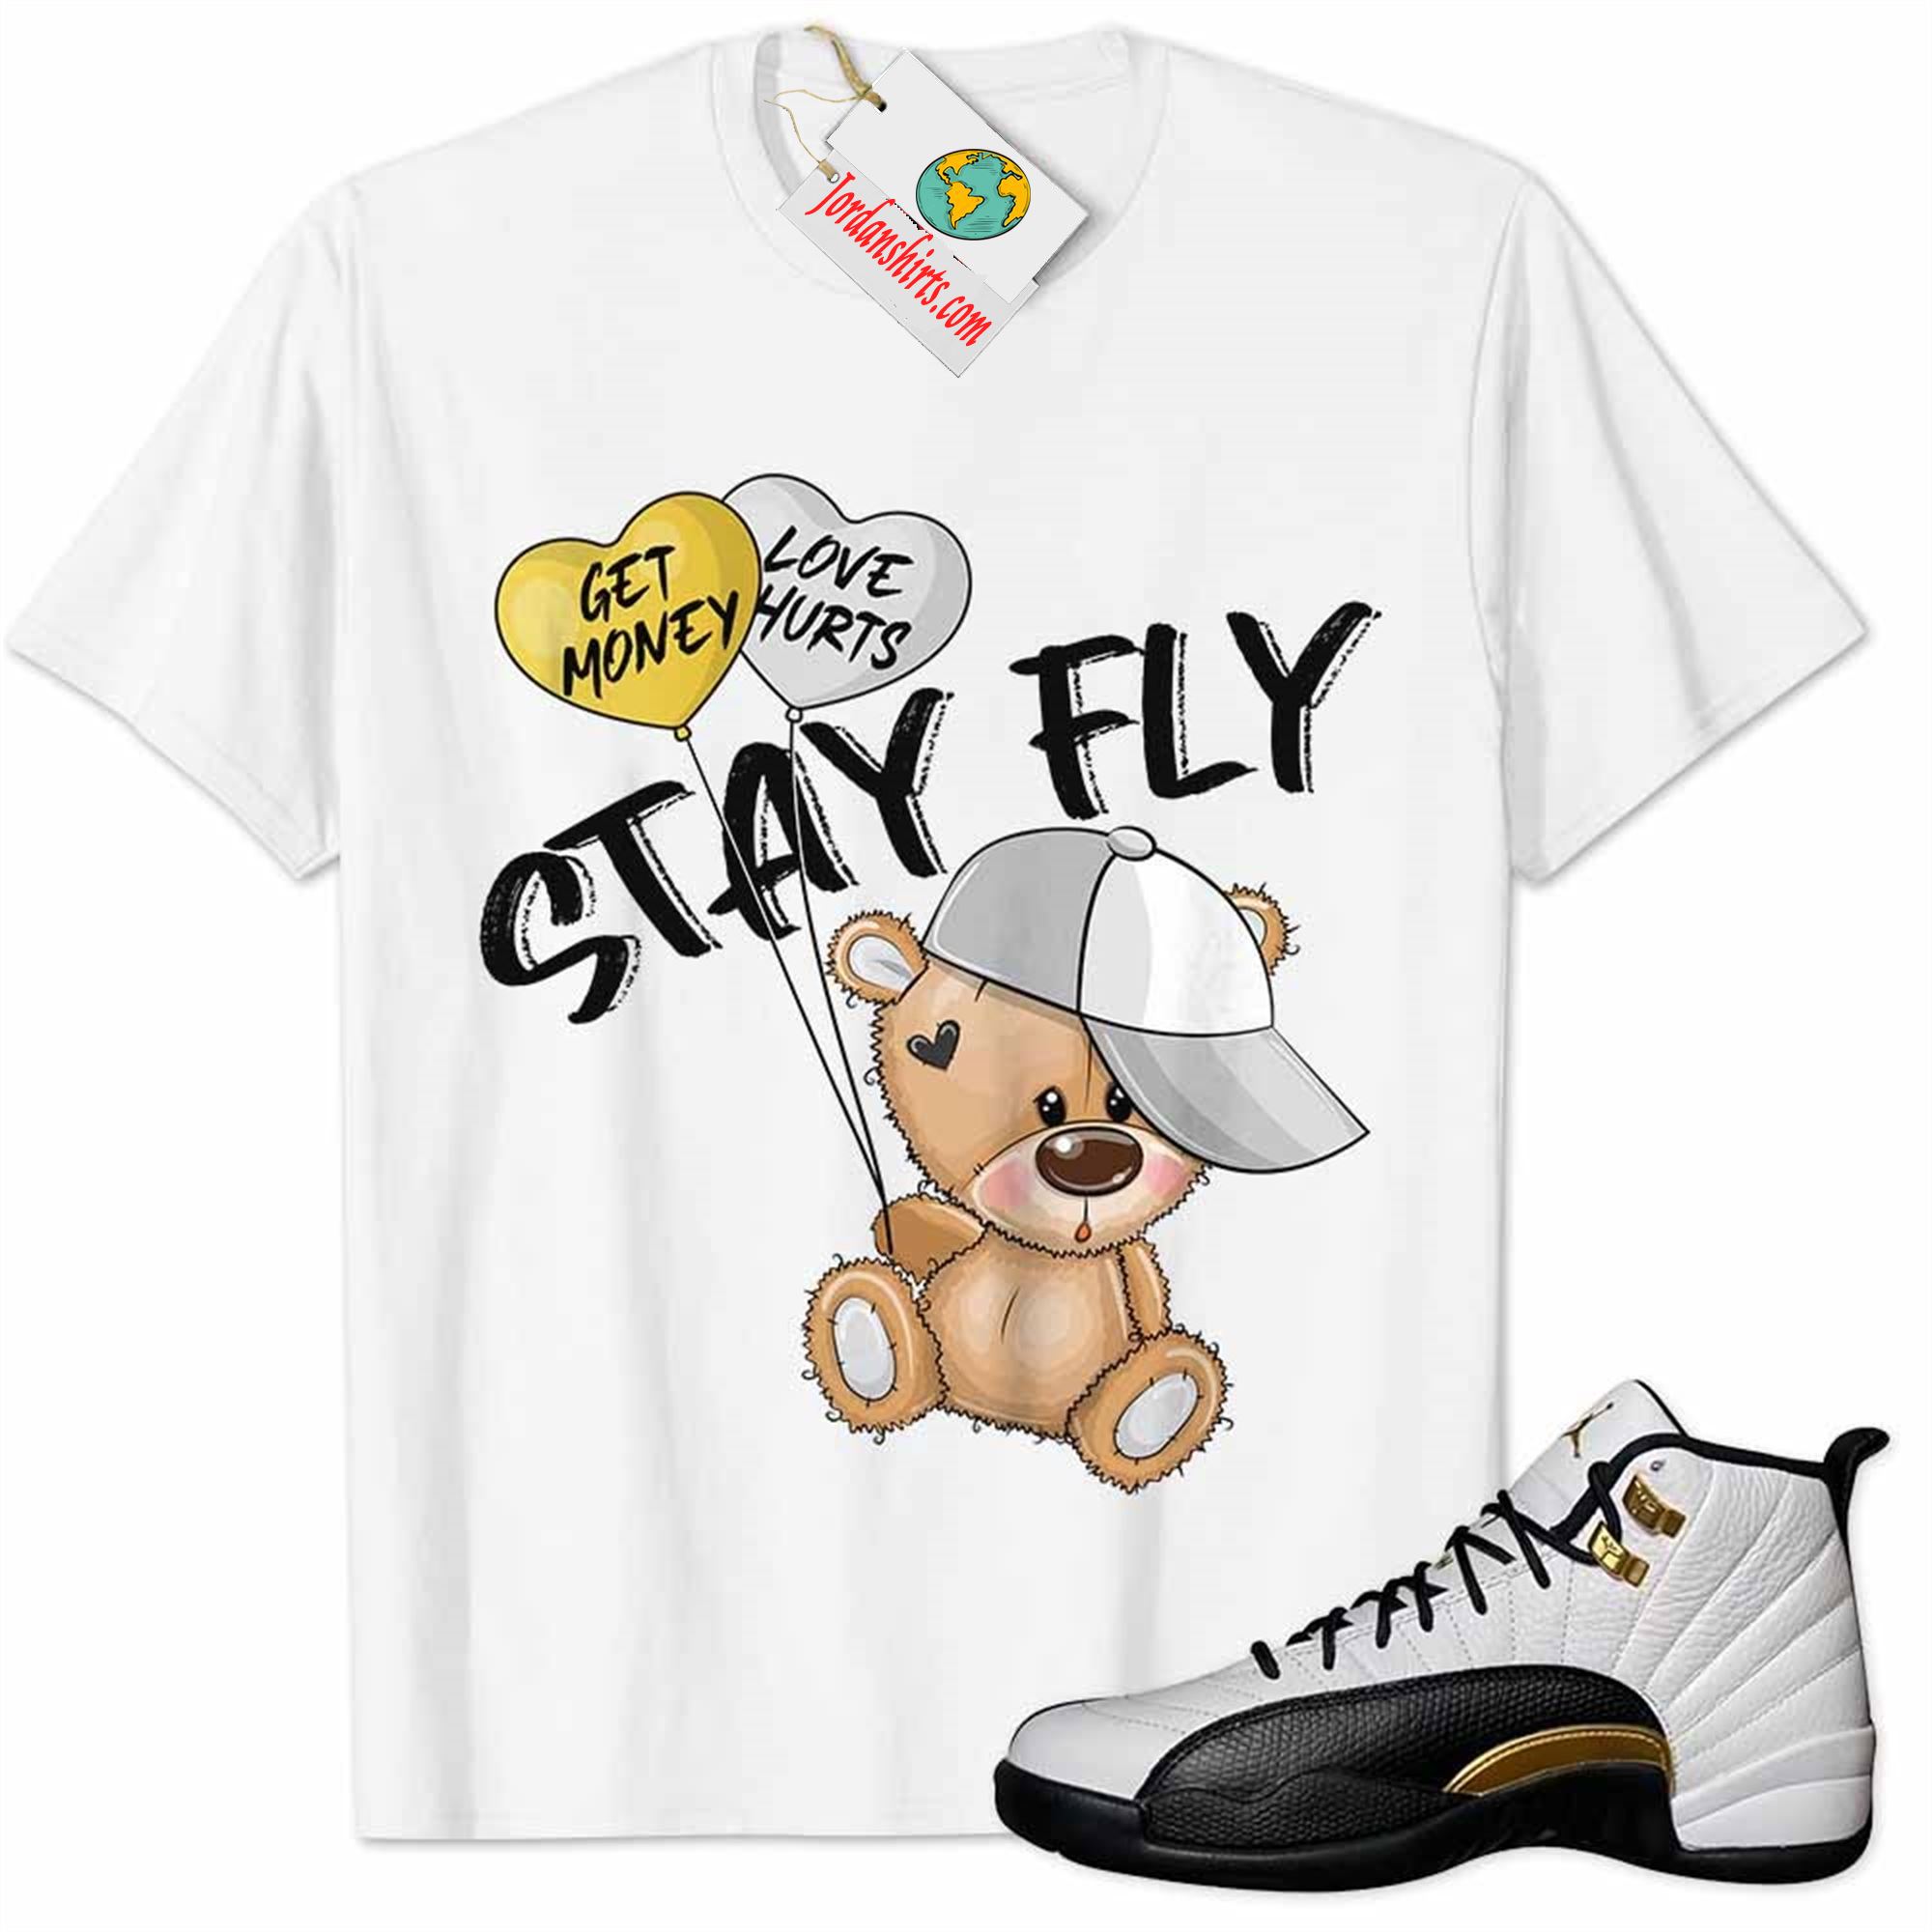 Jordan 12 Shirt, Royalty 12s Shirt Cute Teddy Bear Stay Fly Get Money White Plus Size Up To 5xl